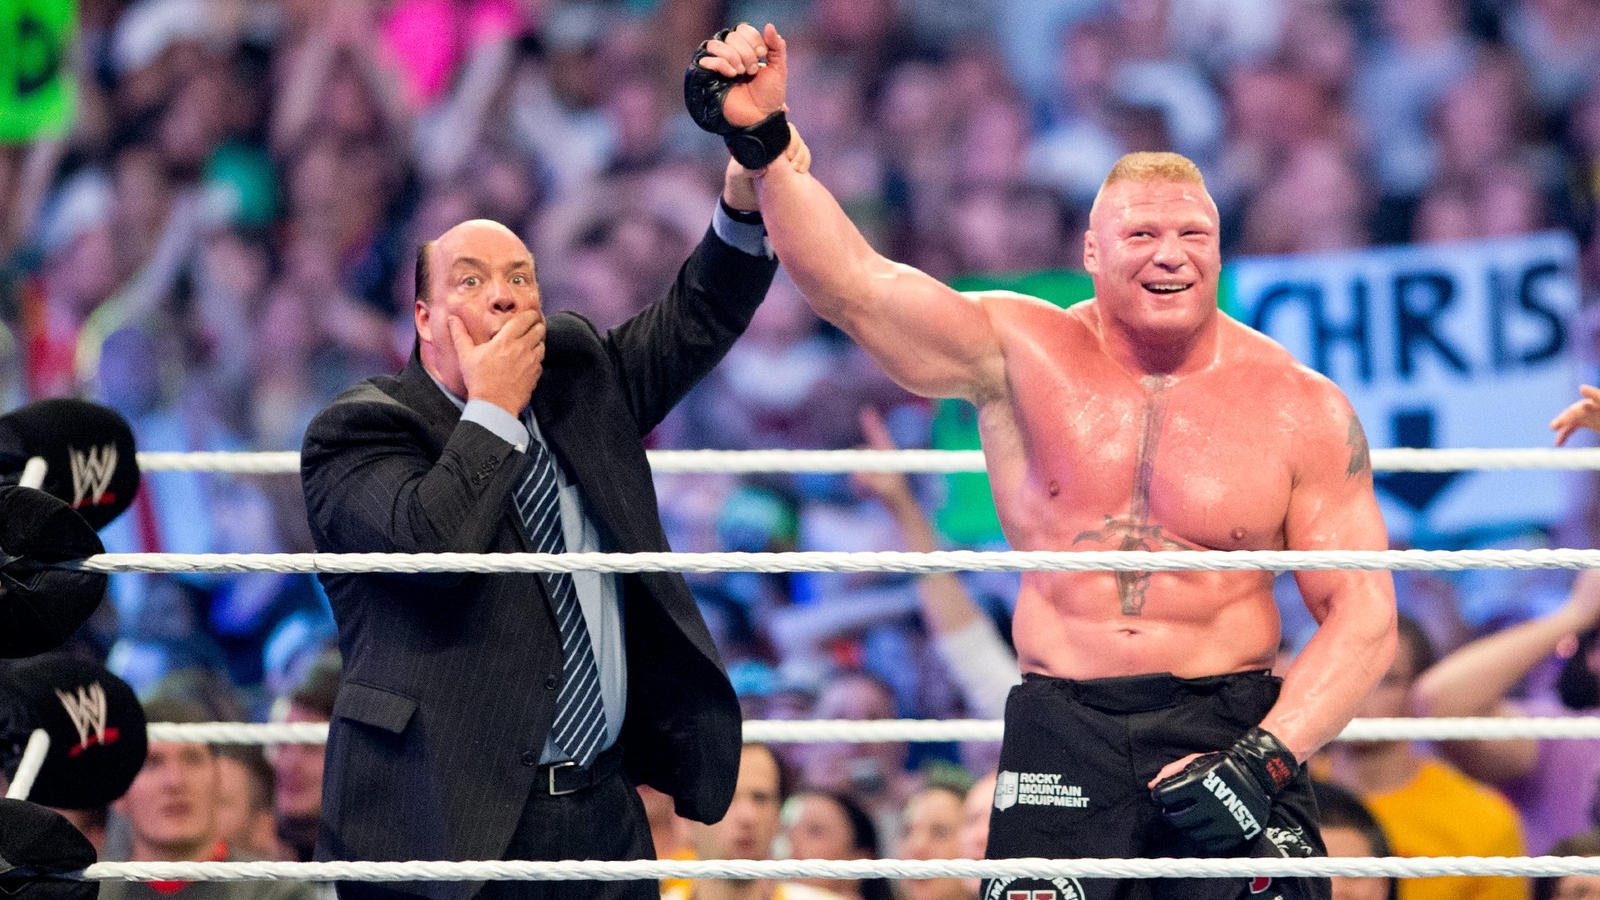 ТОП-10 шокирующих моментов на WrestleMania по версии WWE